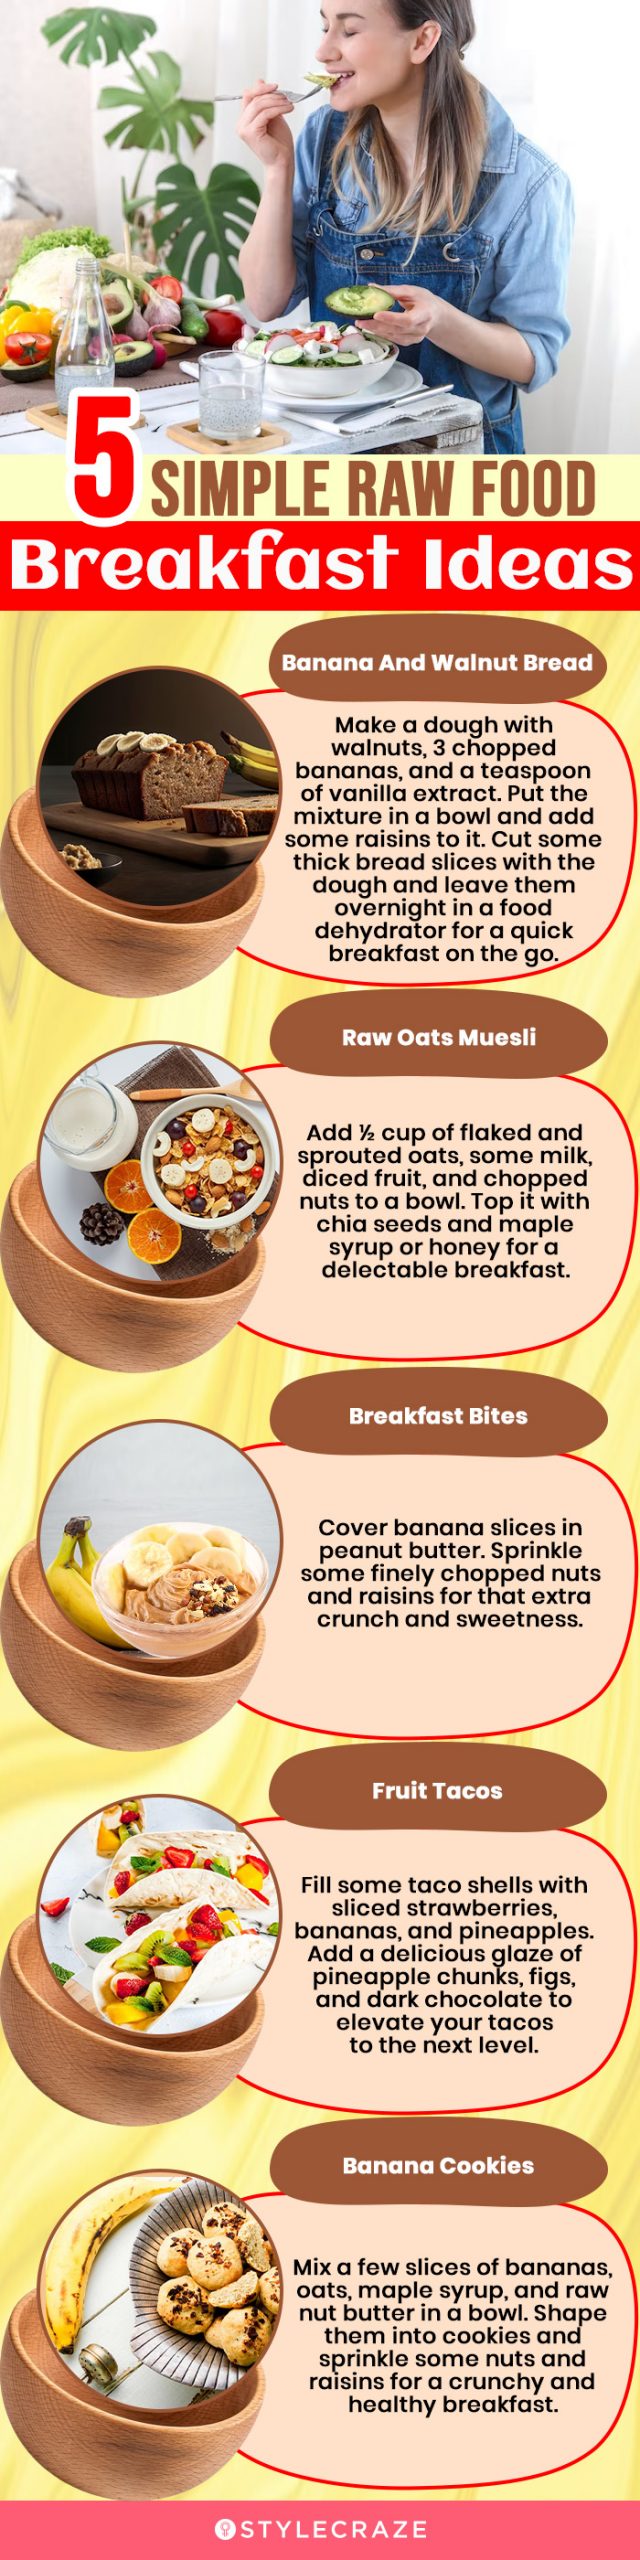 5 simple raw food breakfast ideas (infographic)